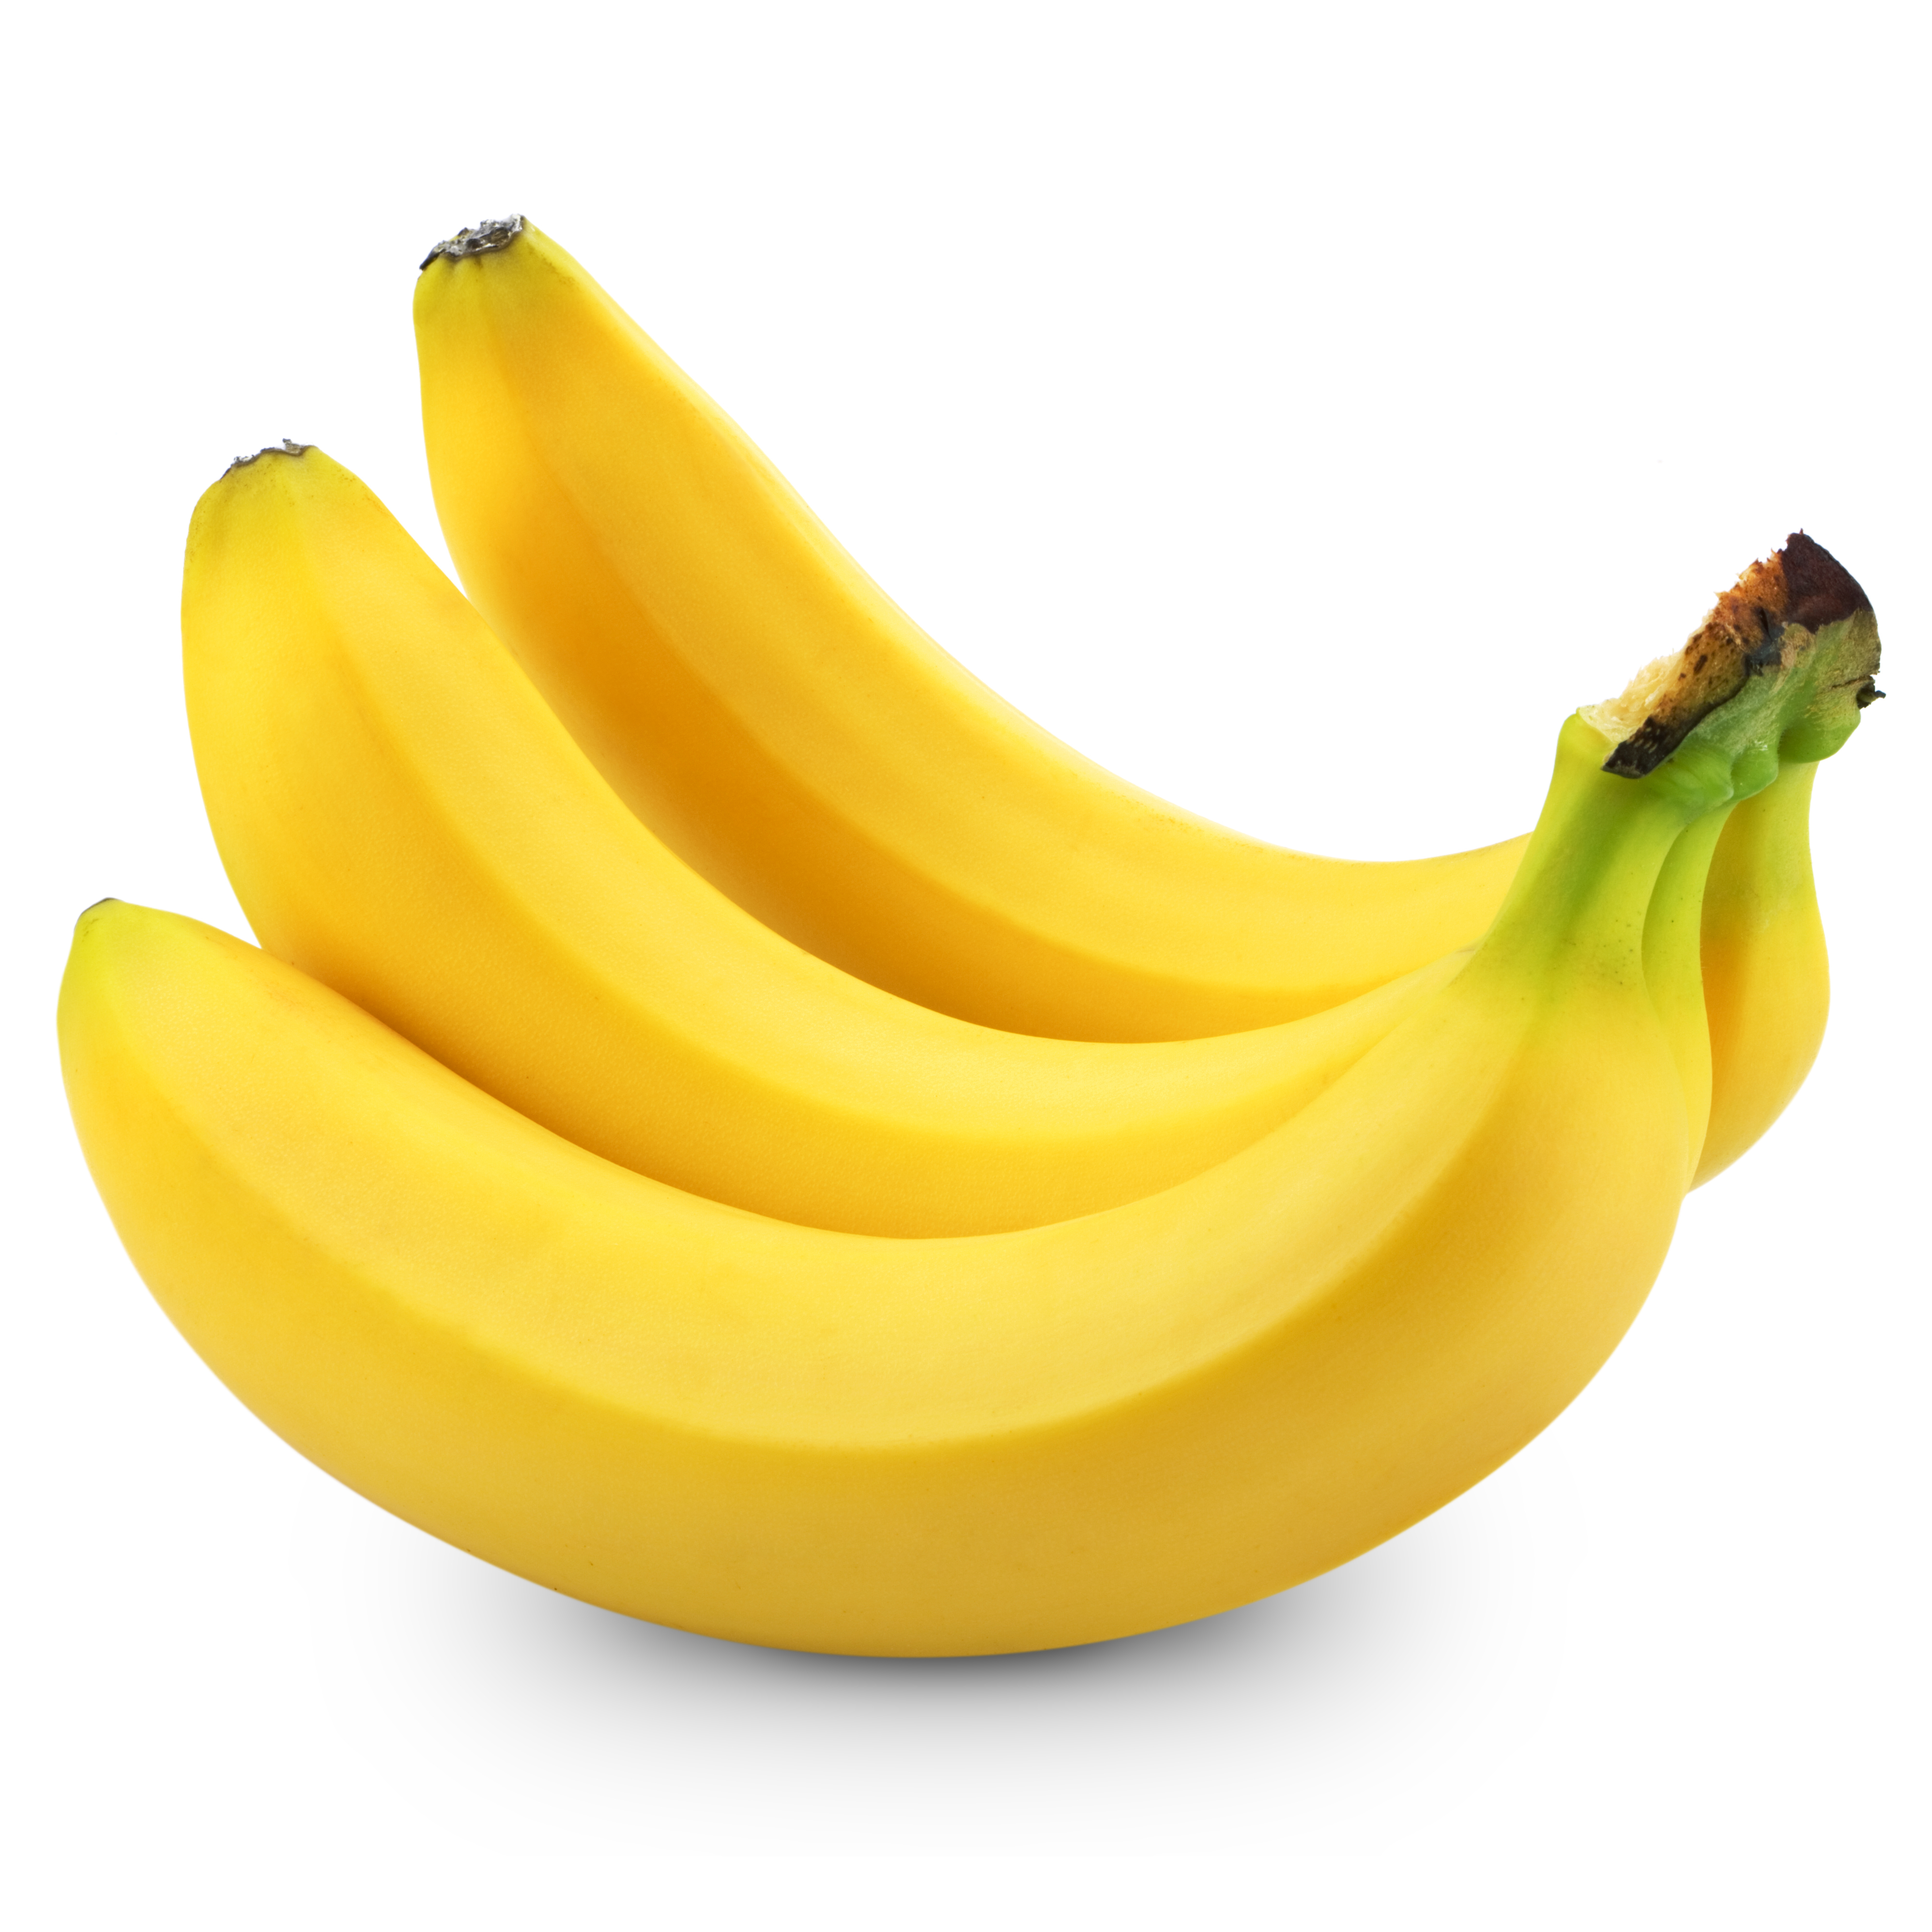 Banana DNA extraction